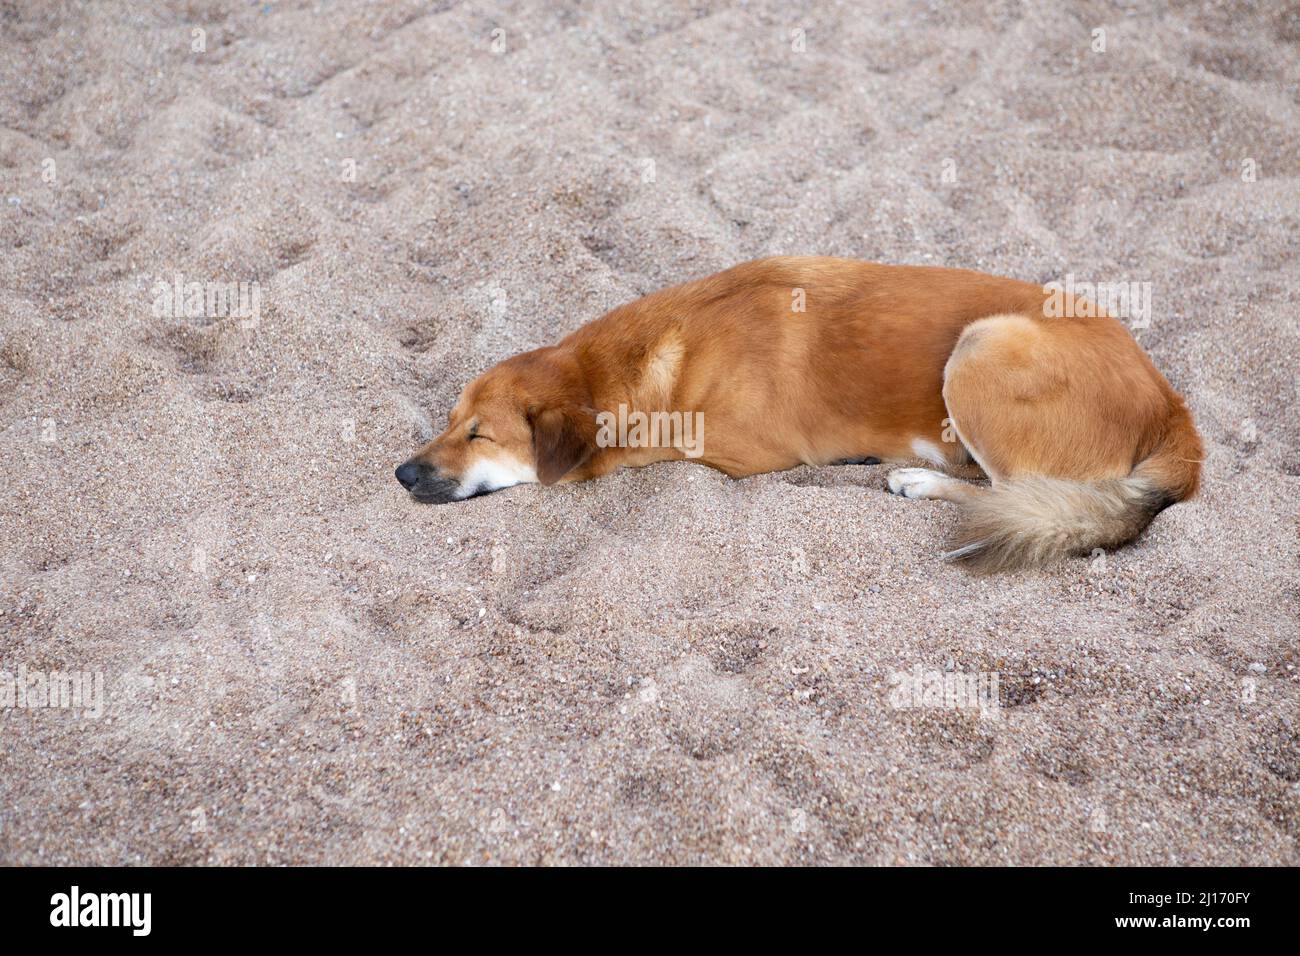 lonely dog lying on sand ground Stock Photo